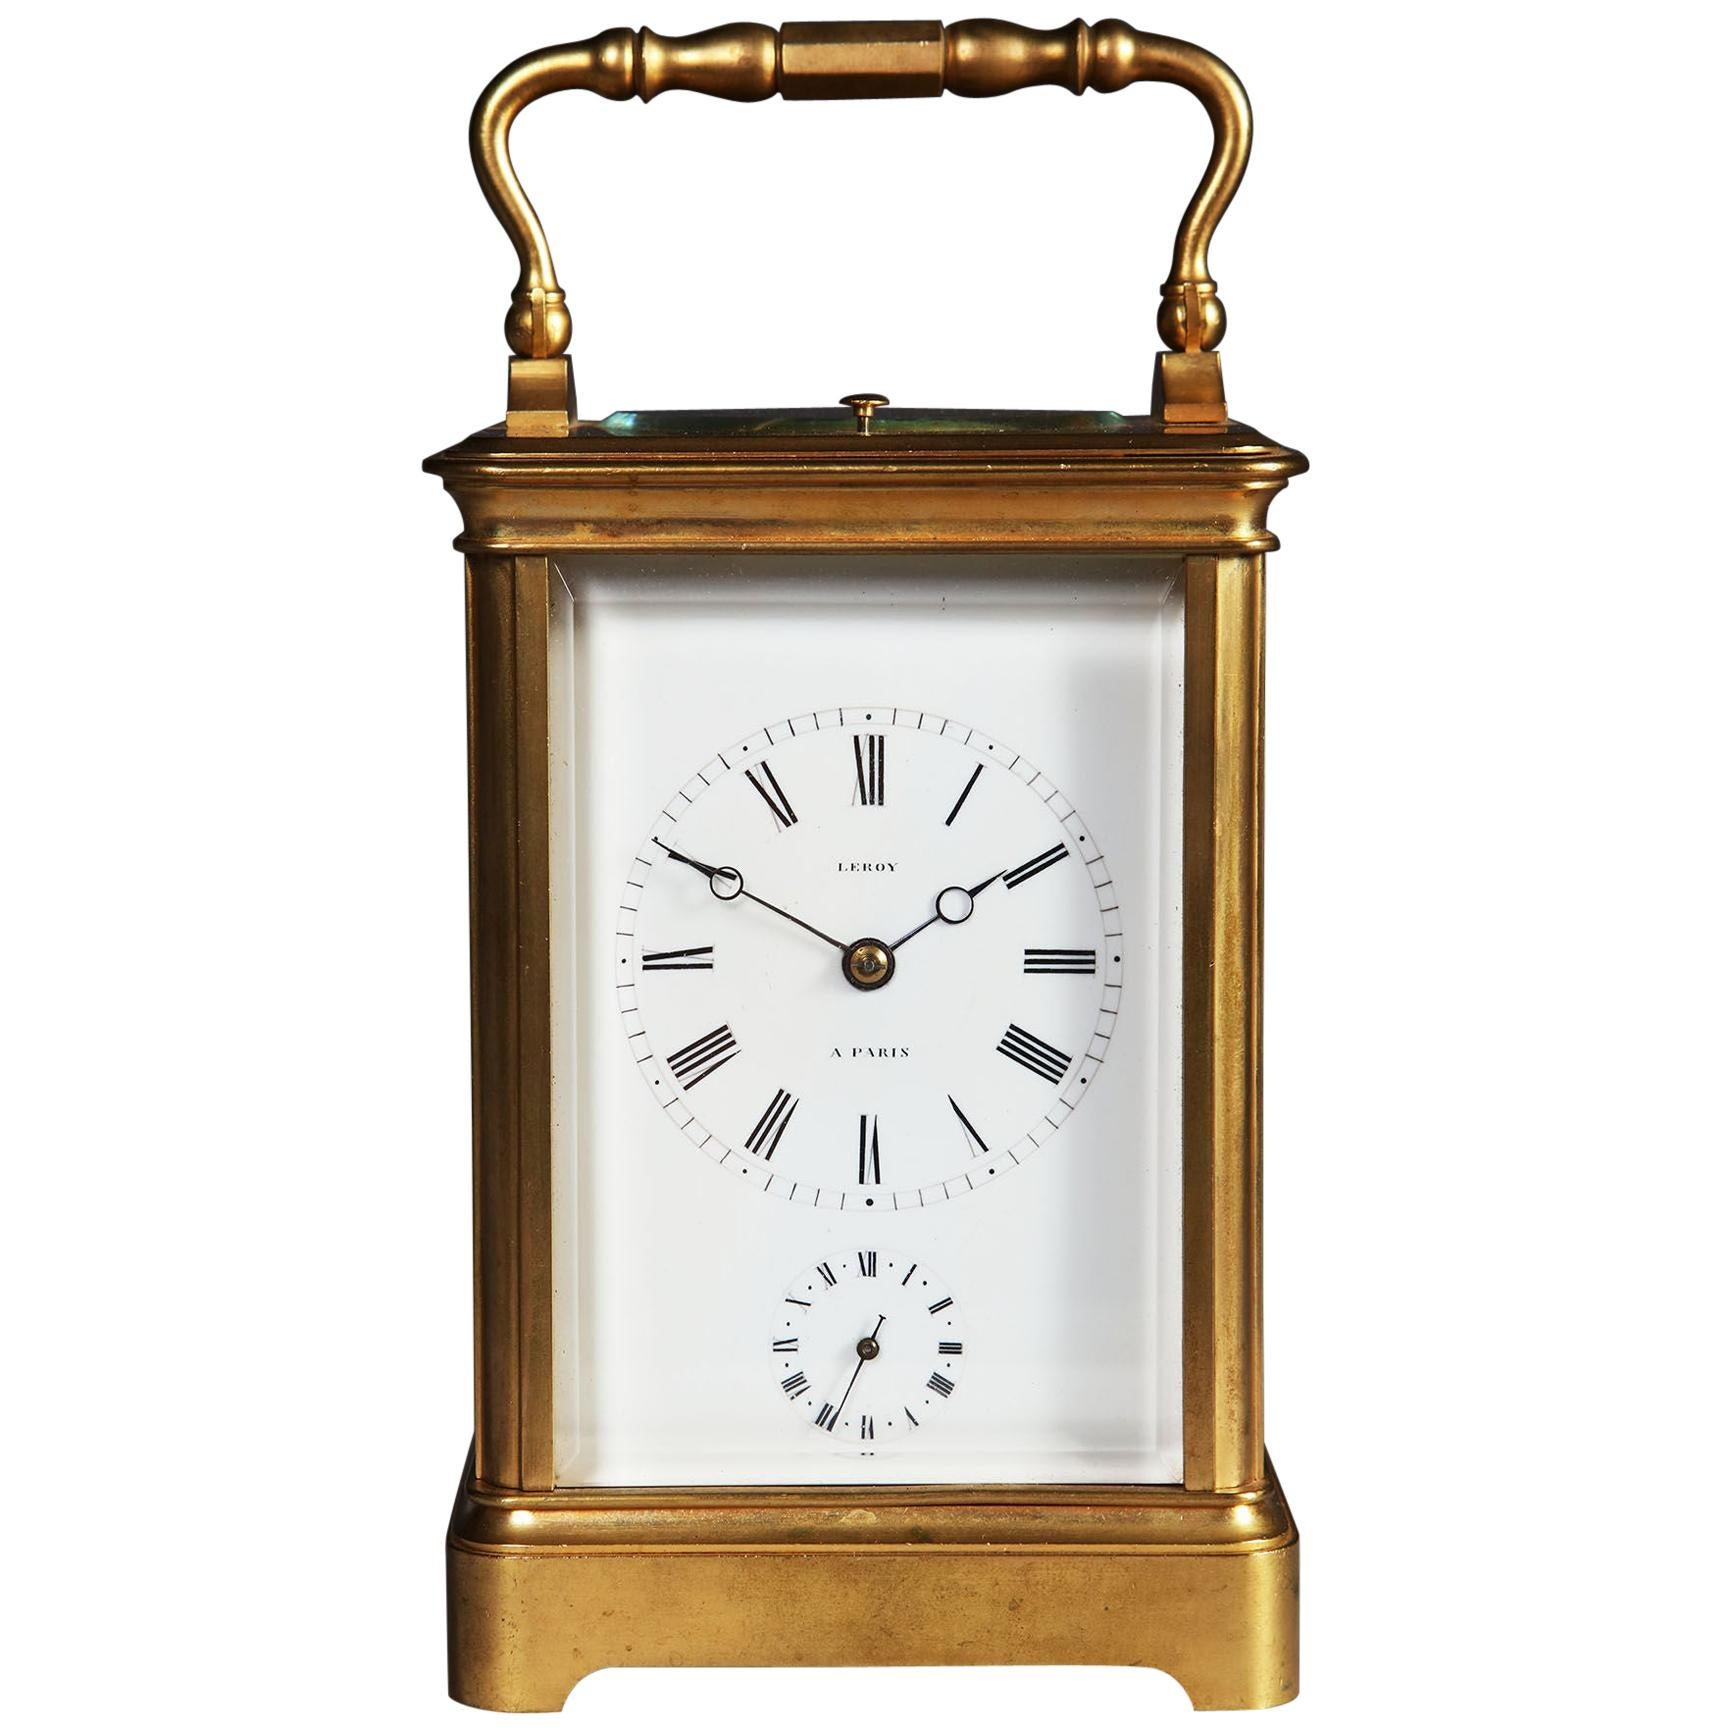 19th Century Quarter-Striking Carriage Clock by Leroy, Paris